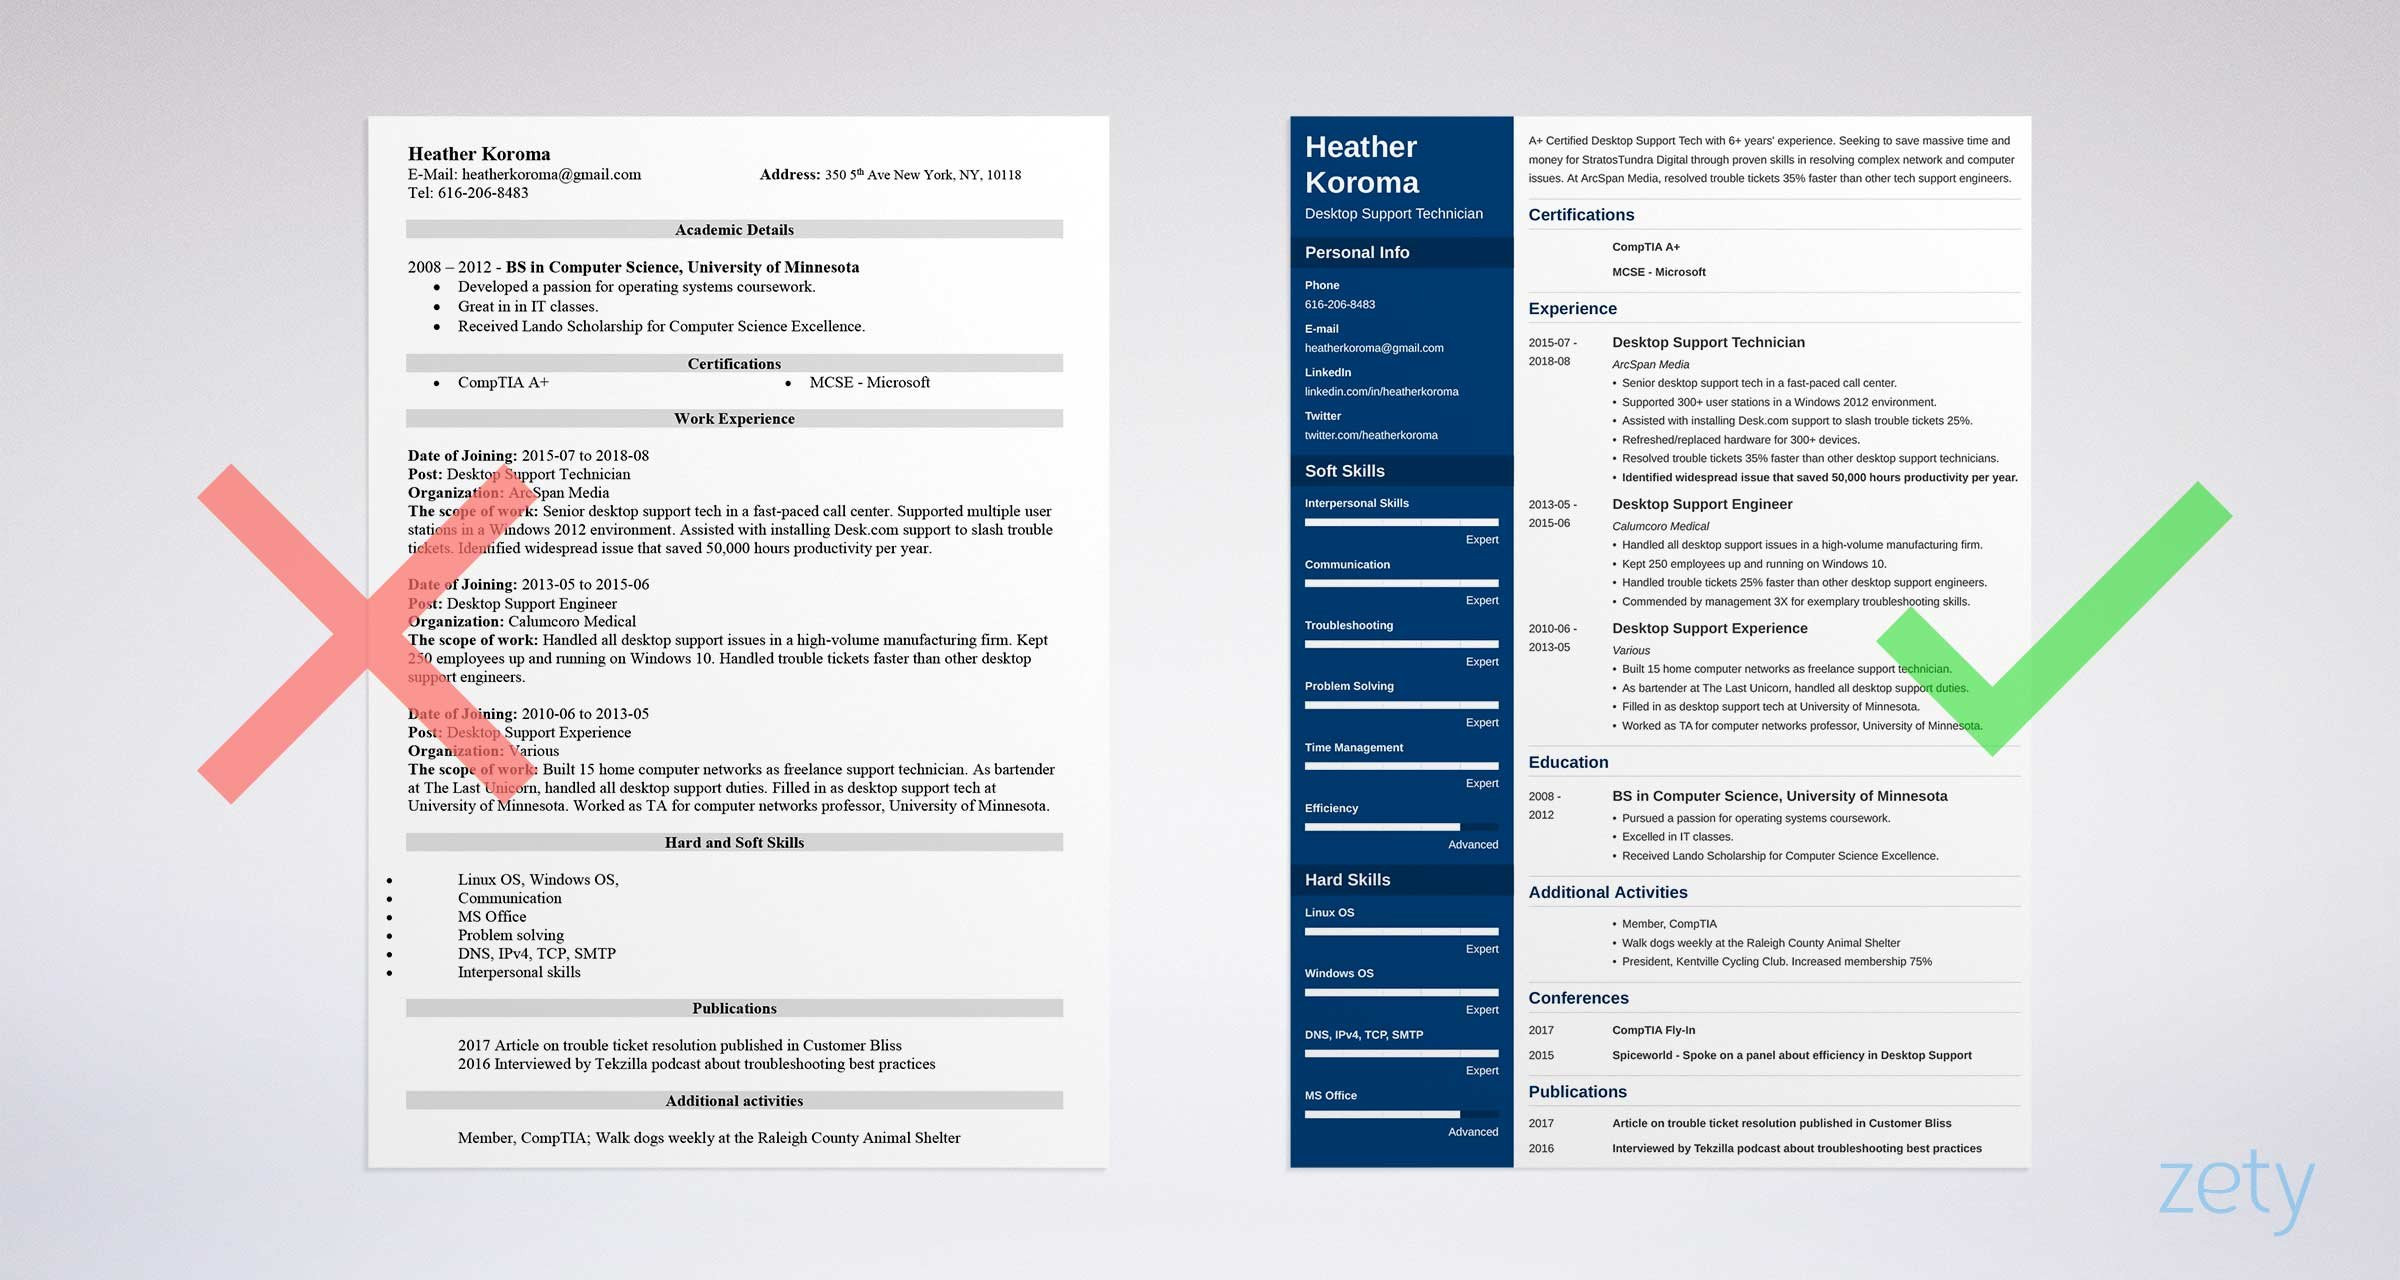 Sample Of A Great Resume Help Desk Desktop Support Resume Samples [also for Technicians]